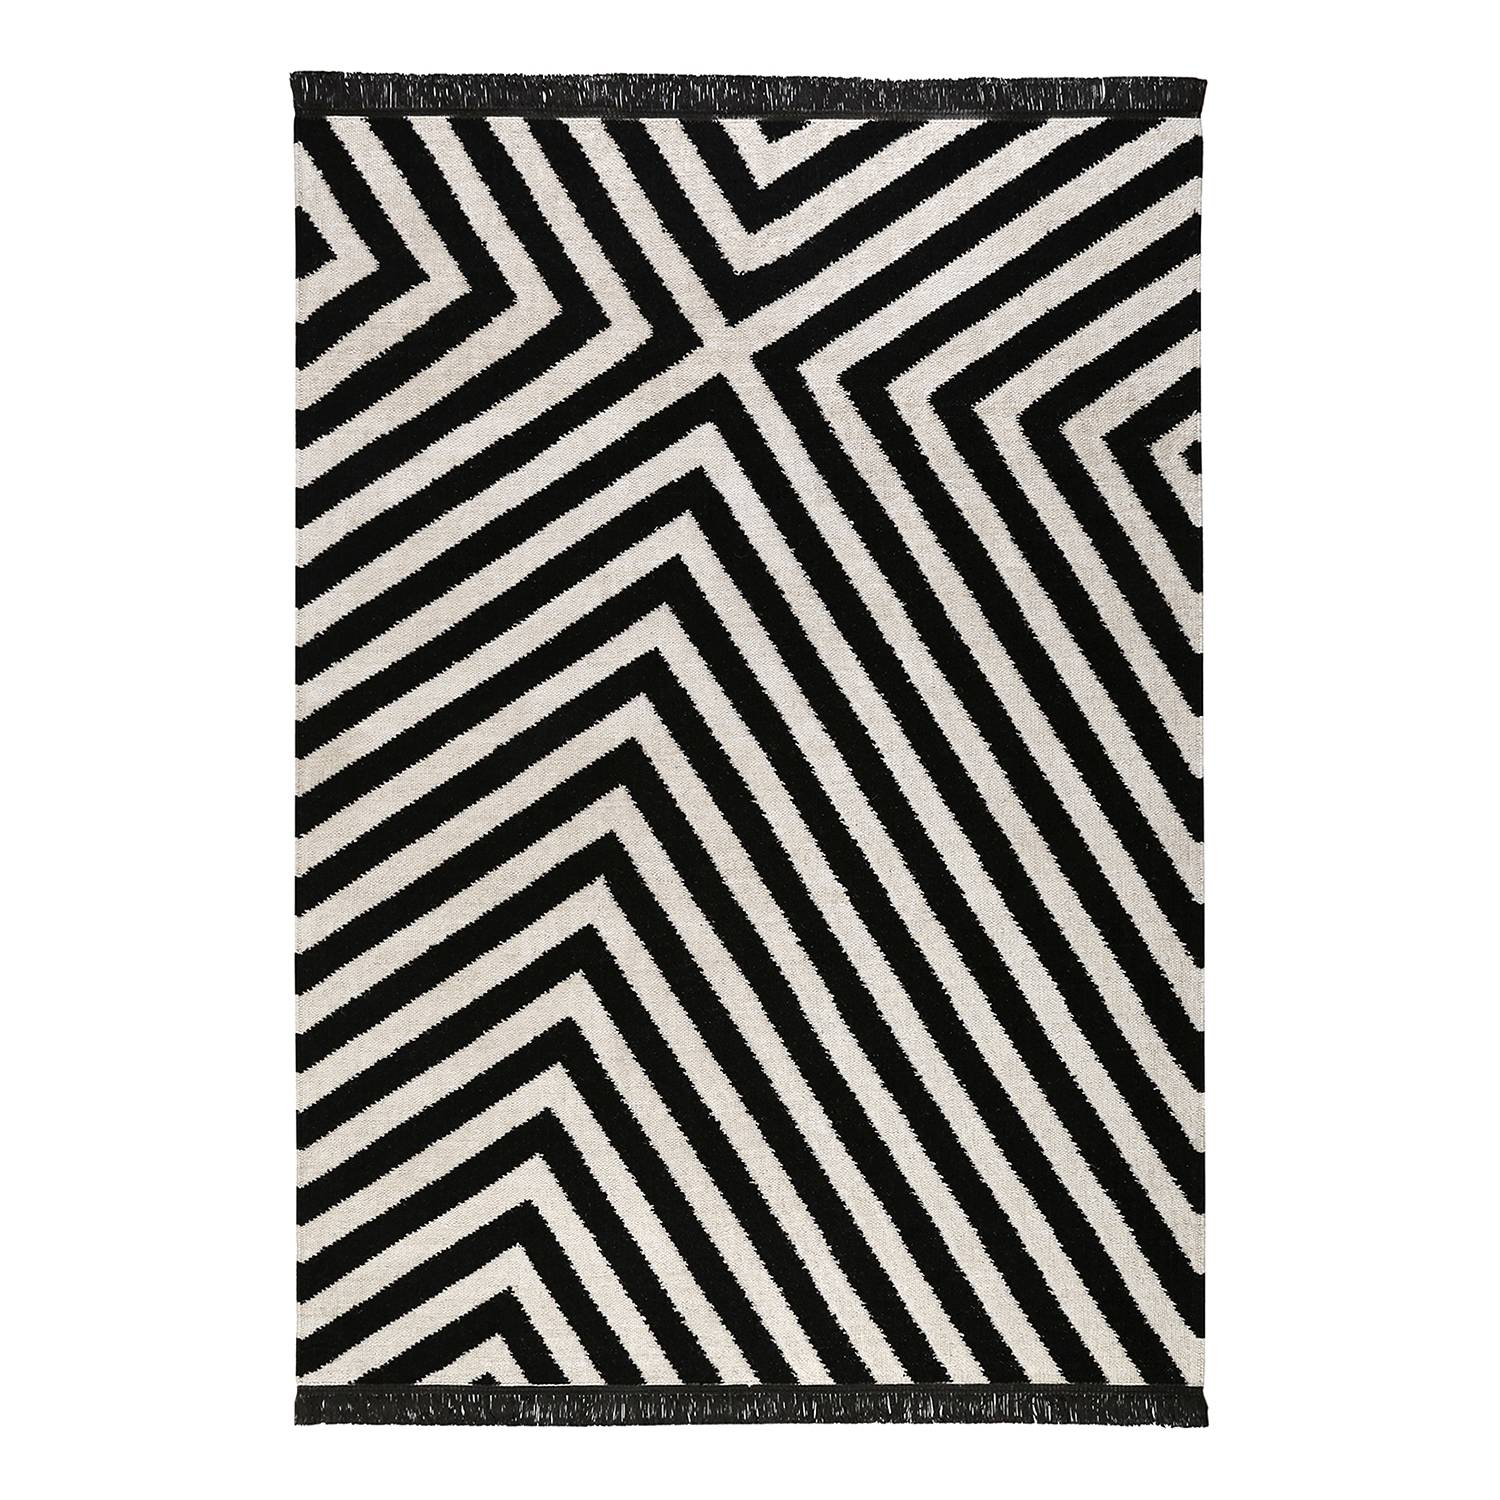 Teppich Edgy Corners (handgewebt) - Mischgewebe - Schwarz / Creme - 130 x 190 cm, carpets&co